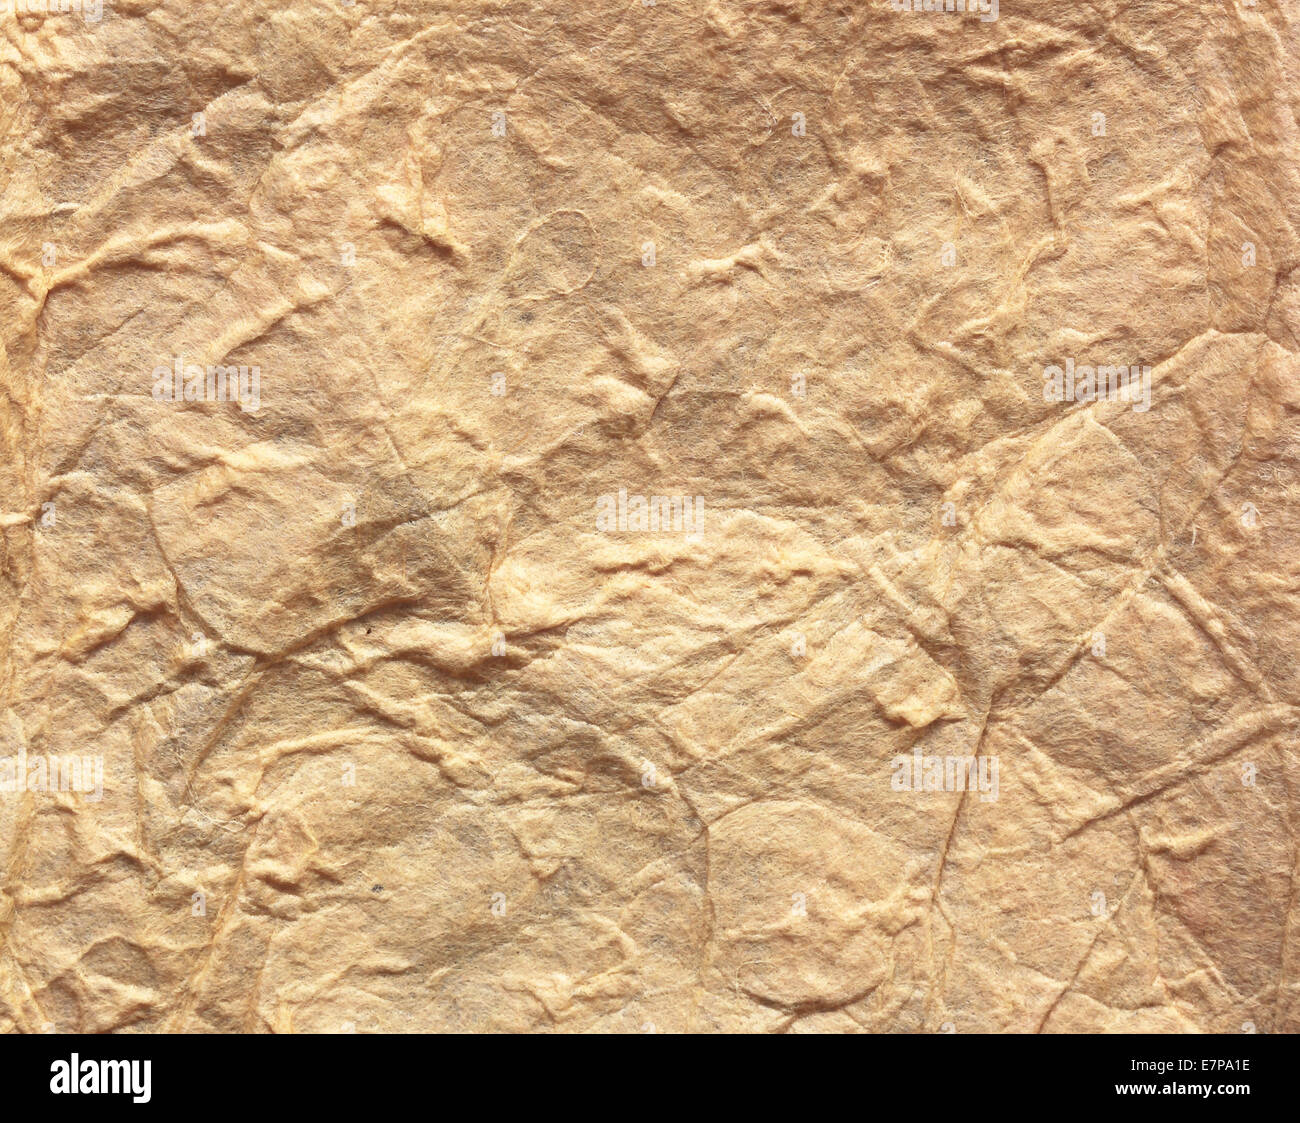 Plis soumis dan brown paper texture pattern abstract background. Banque D'Images